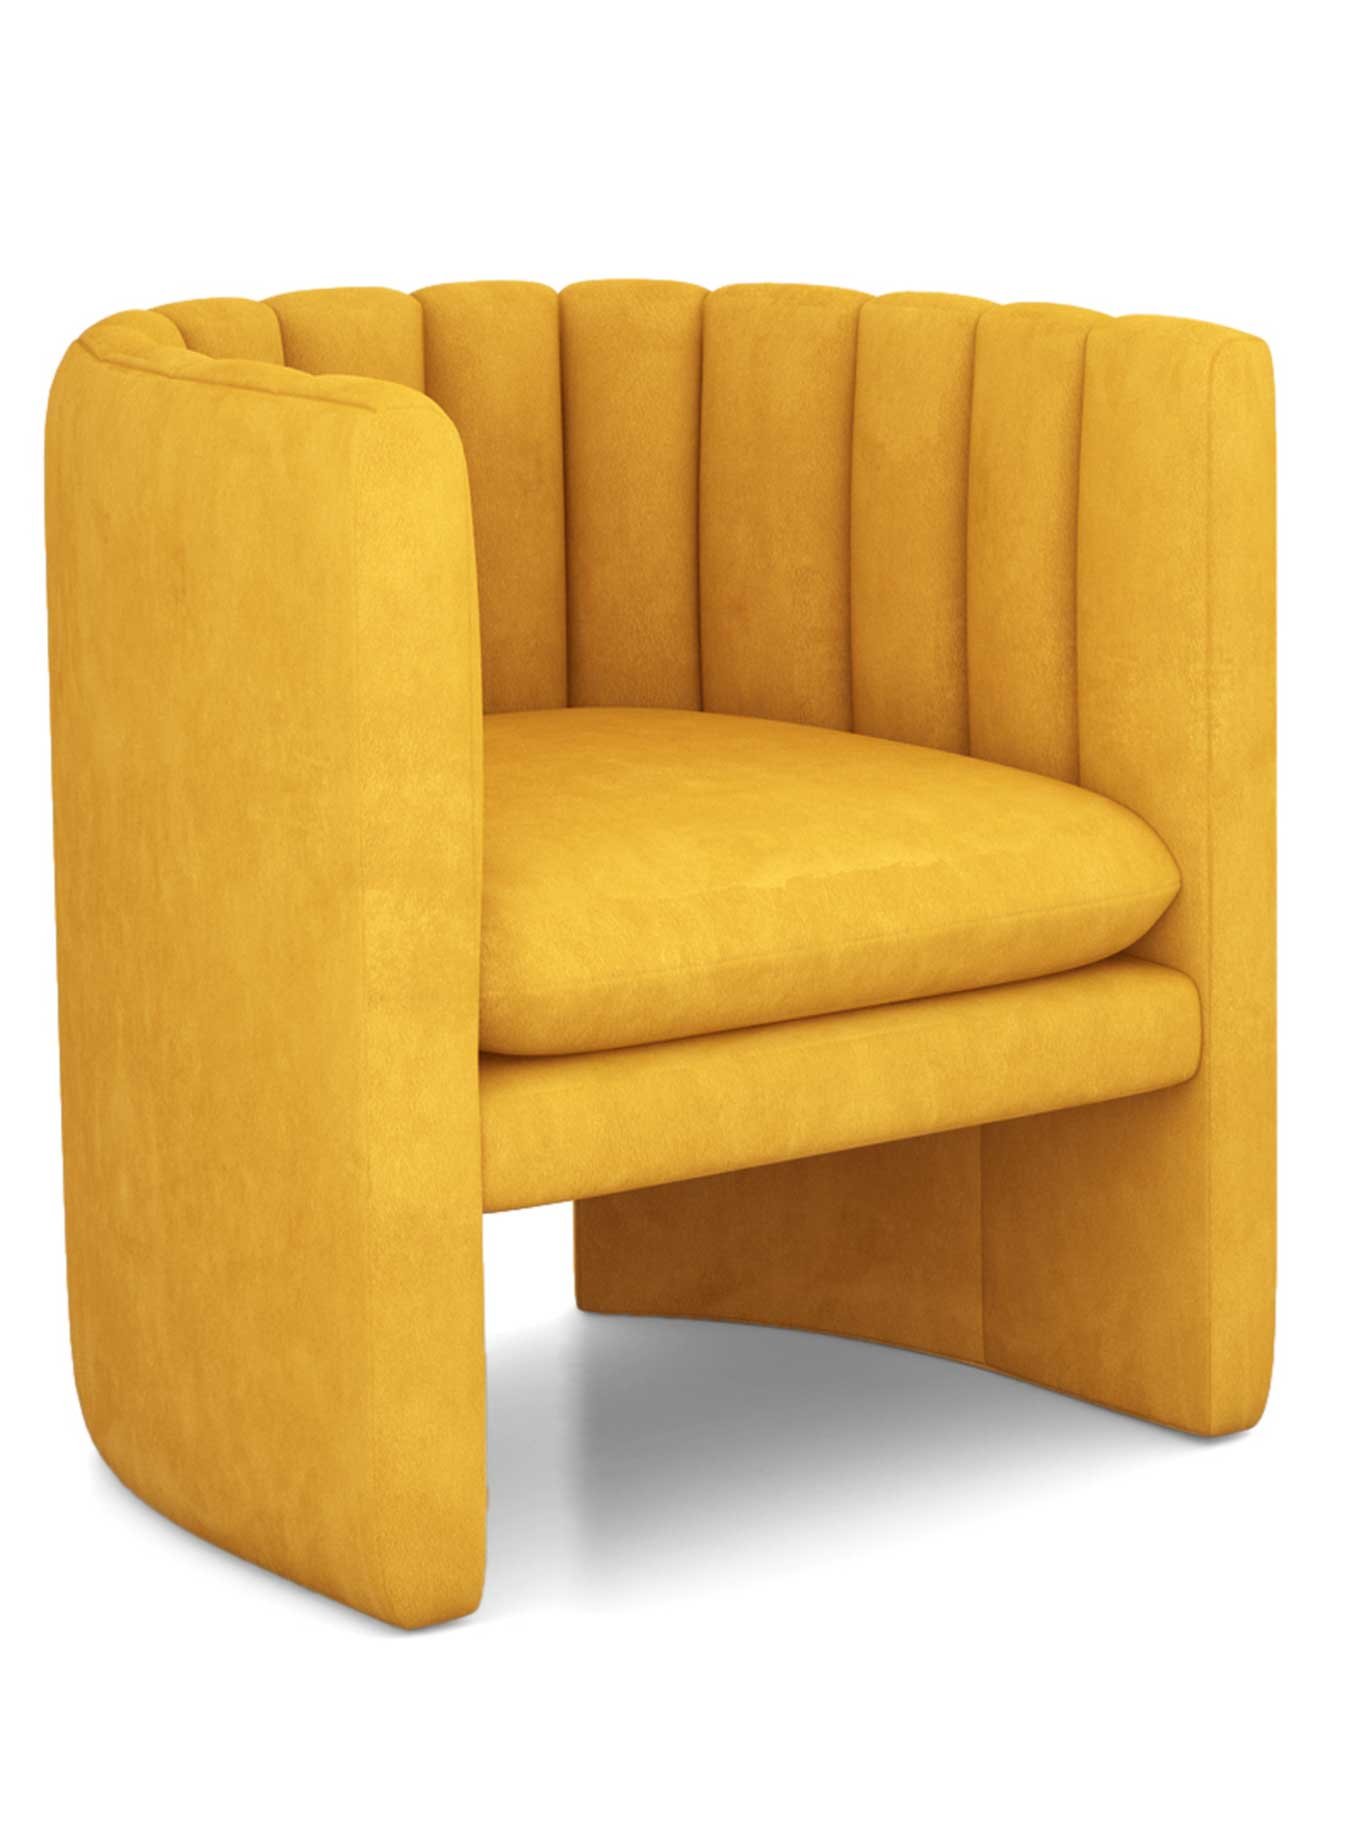 Von &Tradition stammt der Sessel »Loafer« im erdigen Gelbton Dandelion. andtradition.com